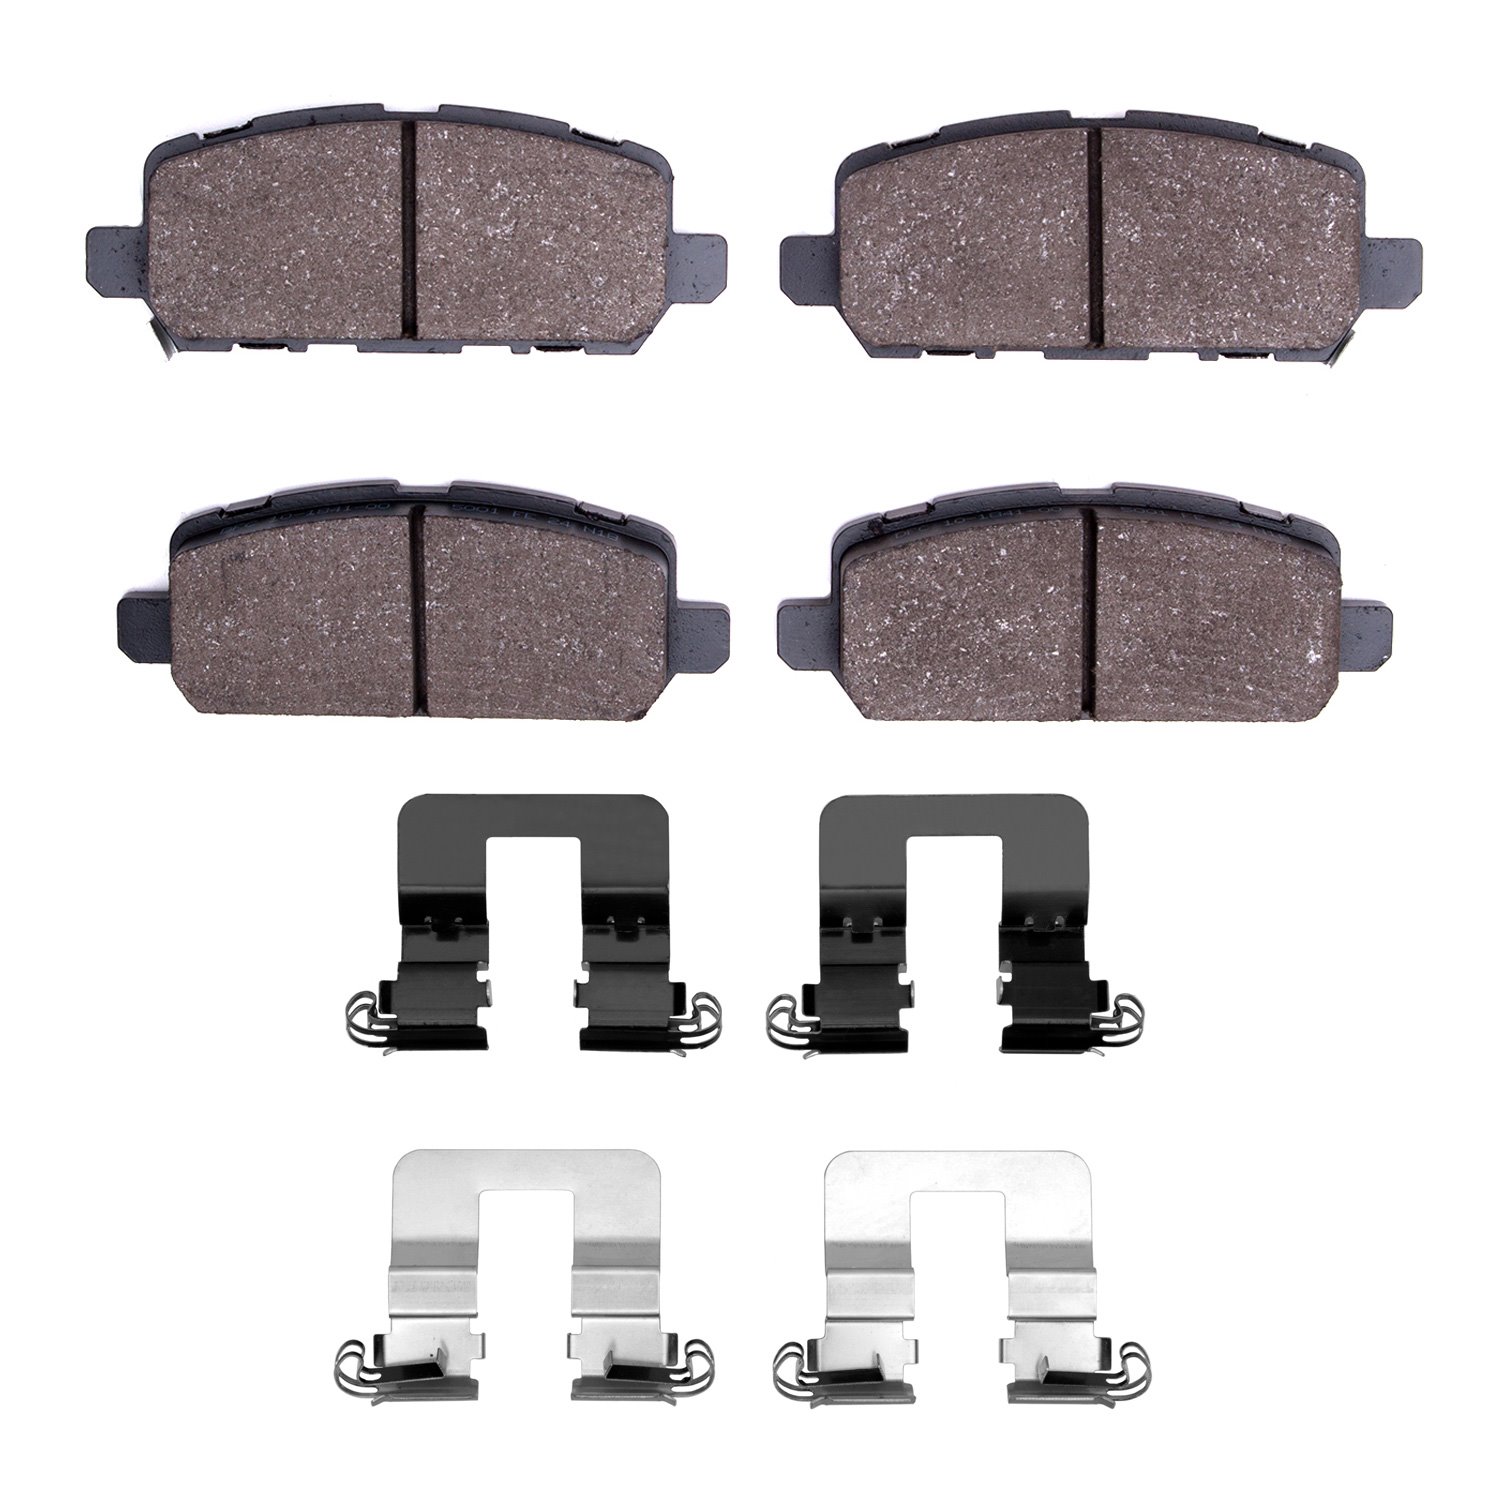 1551-1841-01 5000 Advanced Ceramic Brake Pads & Hardware Kit, Fits Select Acura/Honda, Position: Rear